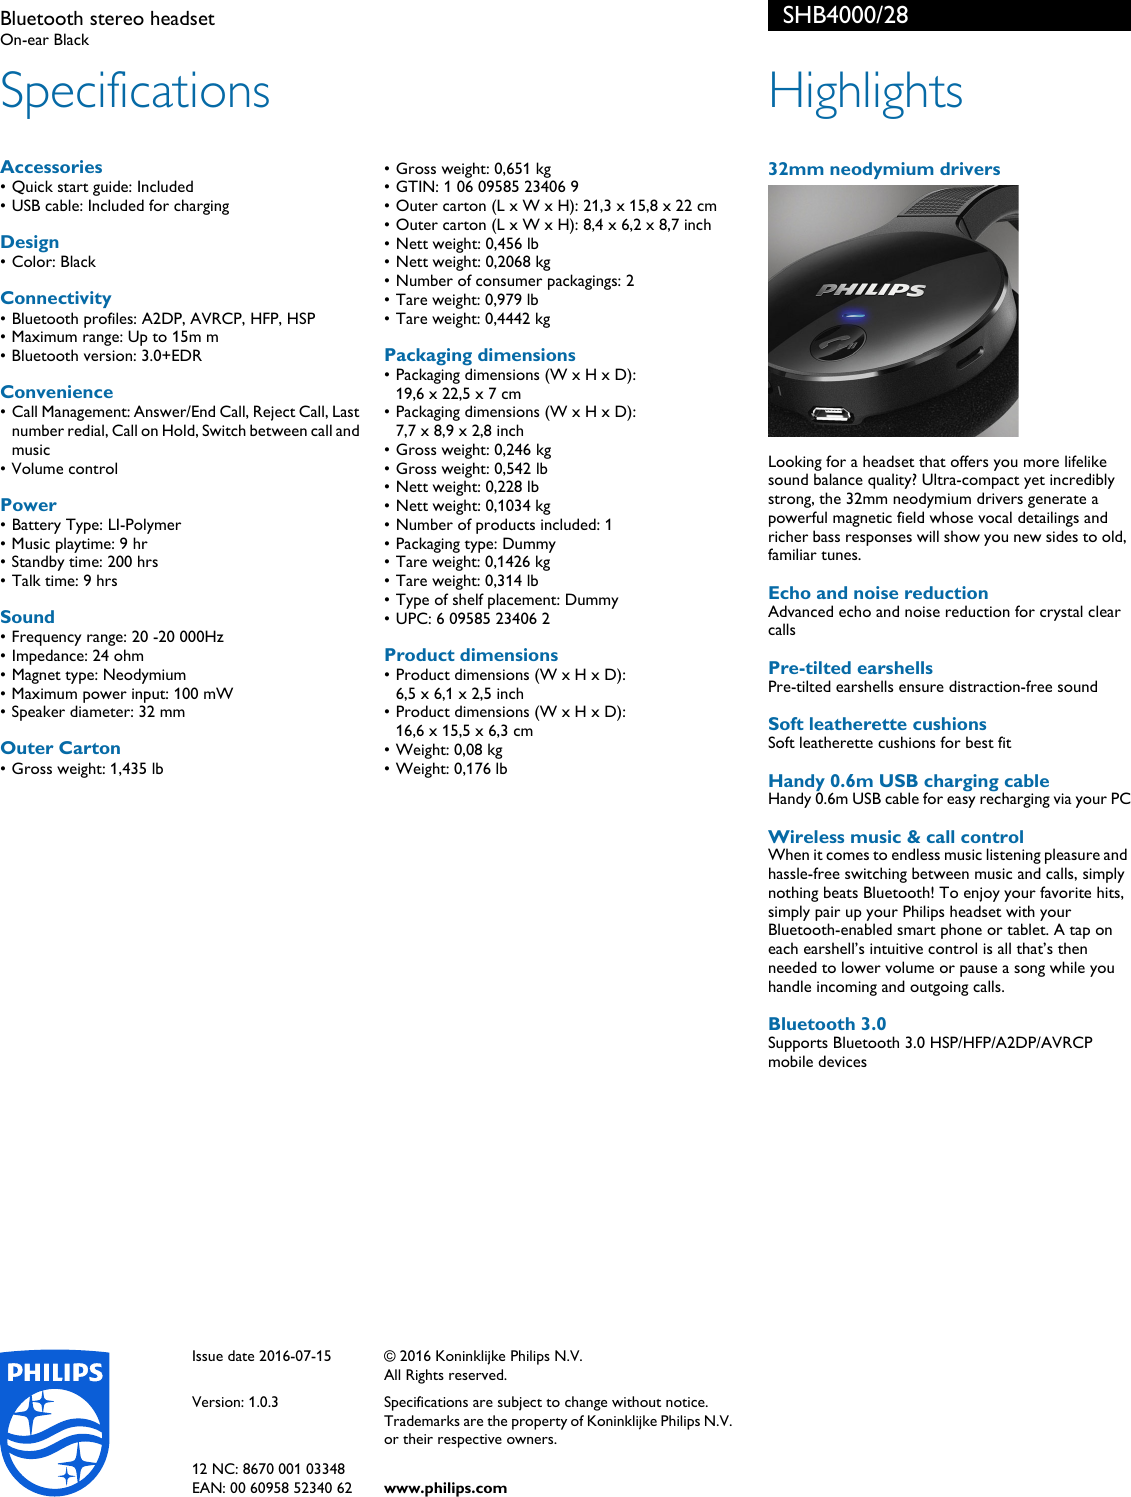 Page 2 of 2 - Philips SHB4000/28 Bluetooth Stereo Headset Shb4000 28 Pss Aenus